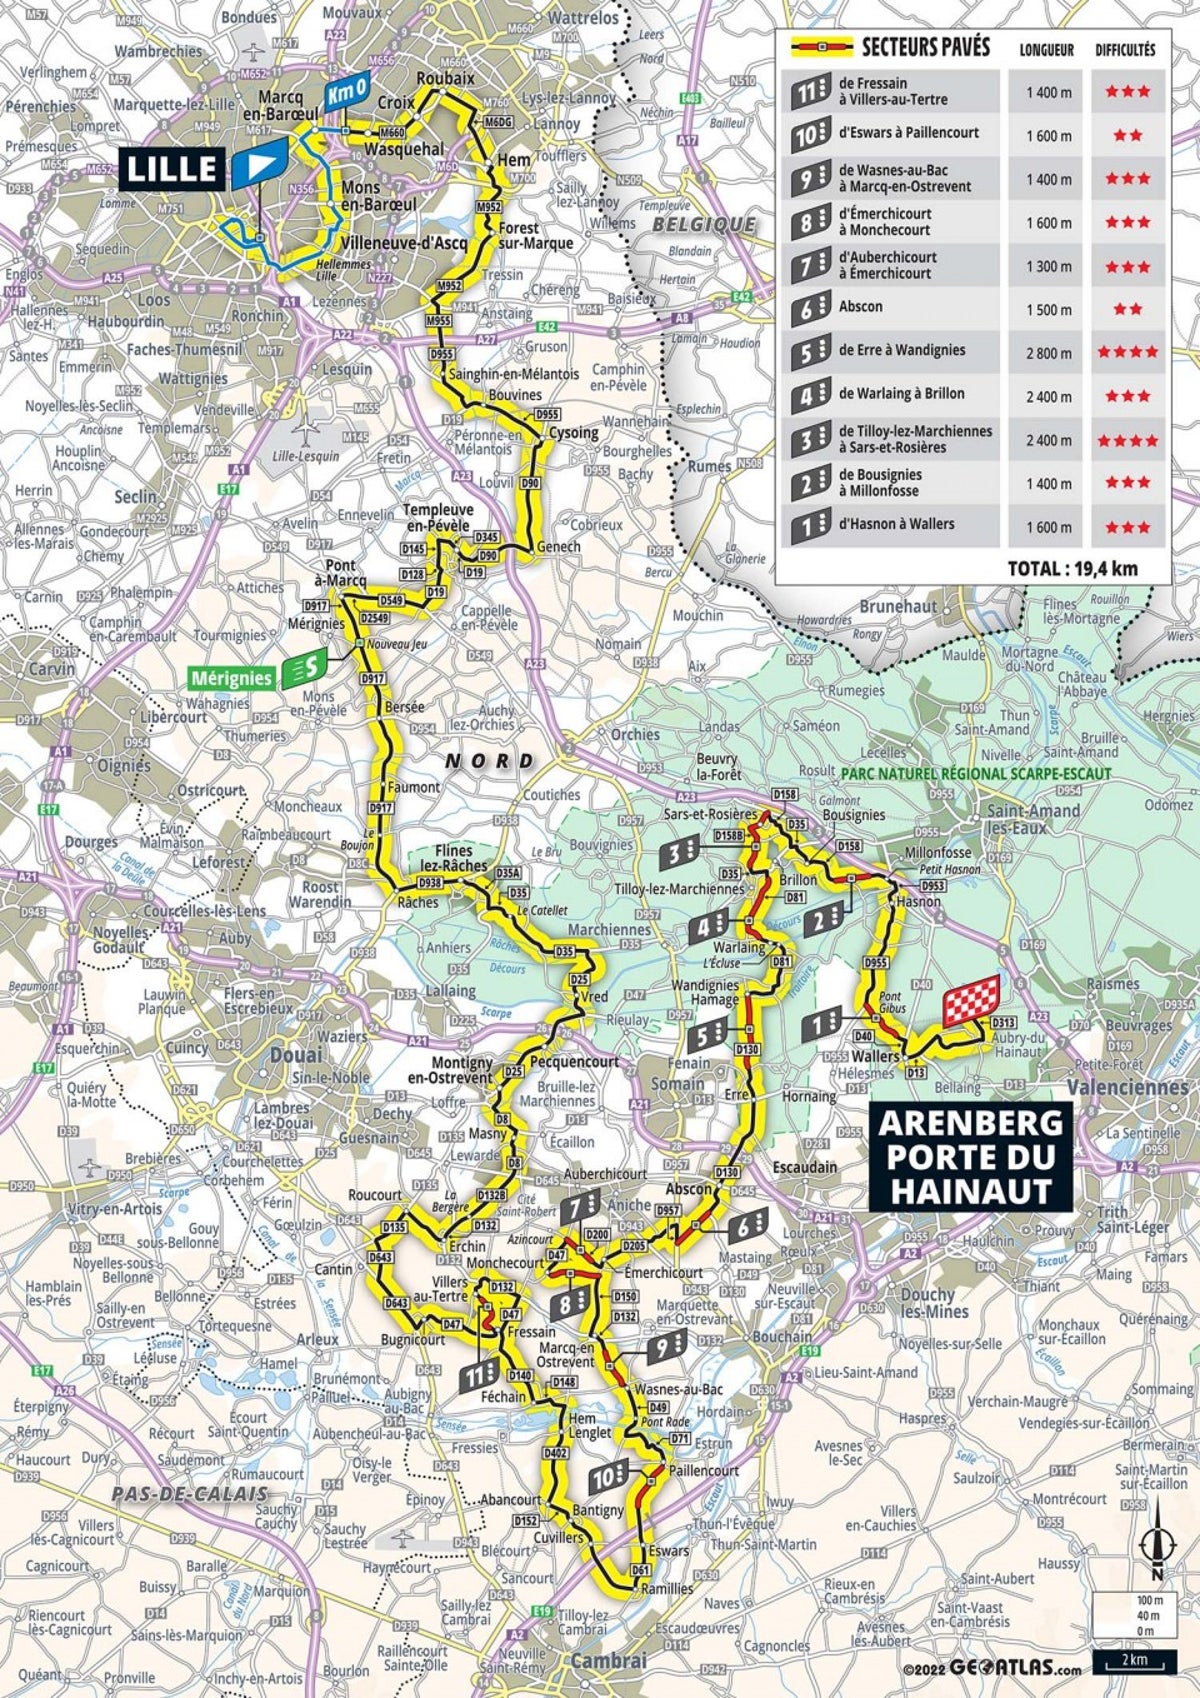 Tour de France 2022 Stage 5 preview: Route map and profile today as cobbles provide treacherous test